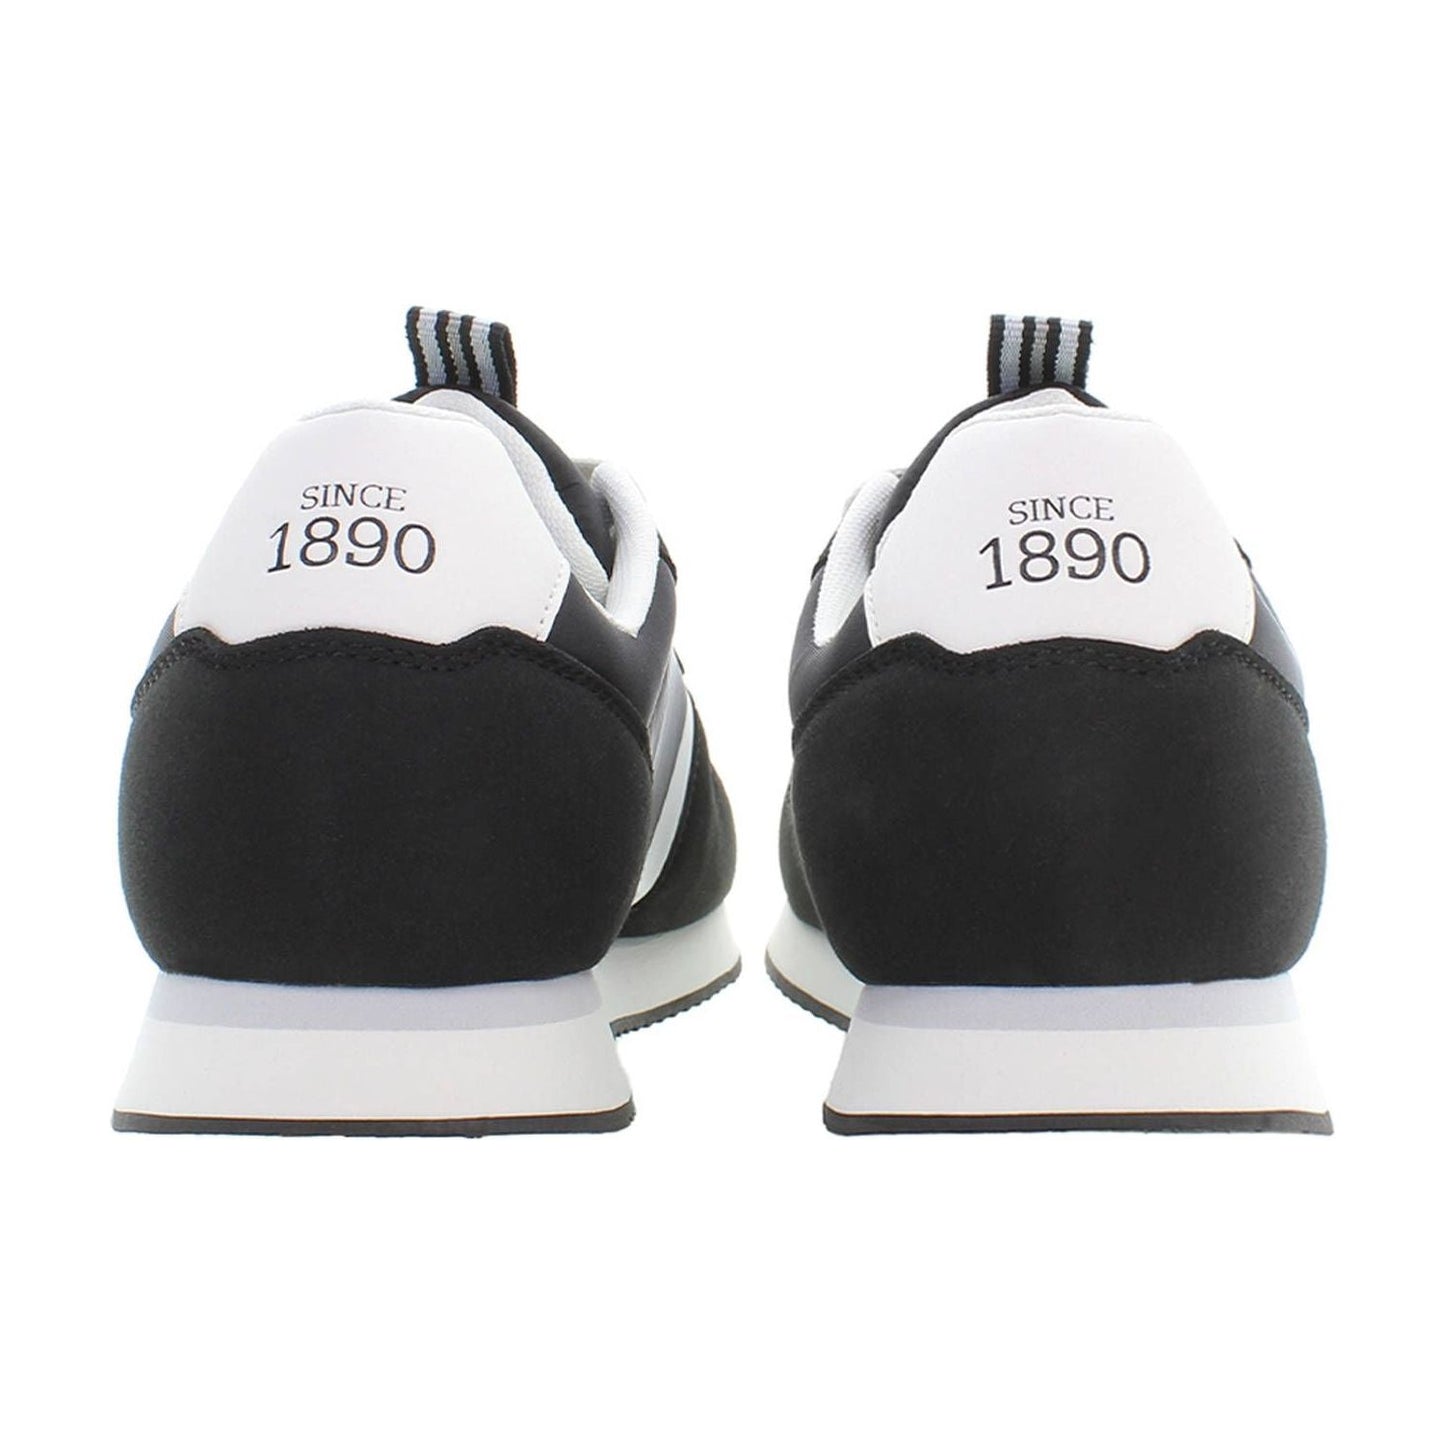 U.S. POLO ASSN. Sleek Black Sneakers with Contrast Accents sleek-black-sneakers-with-contrast-accents